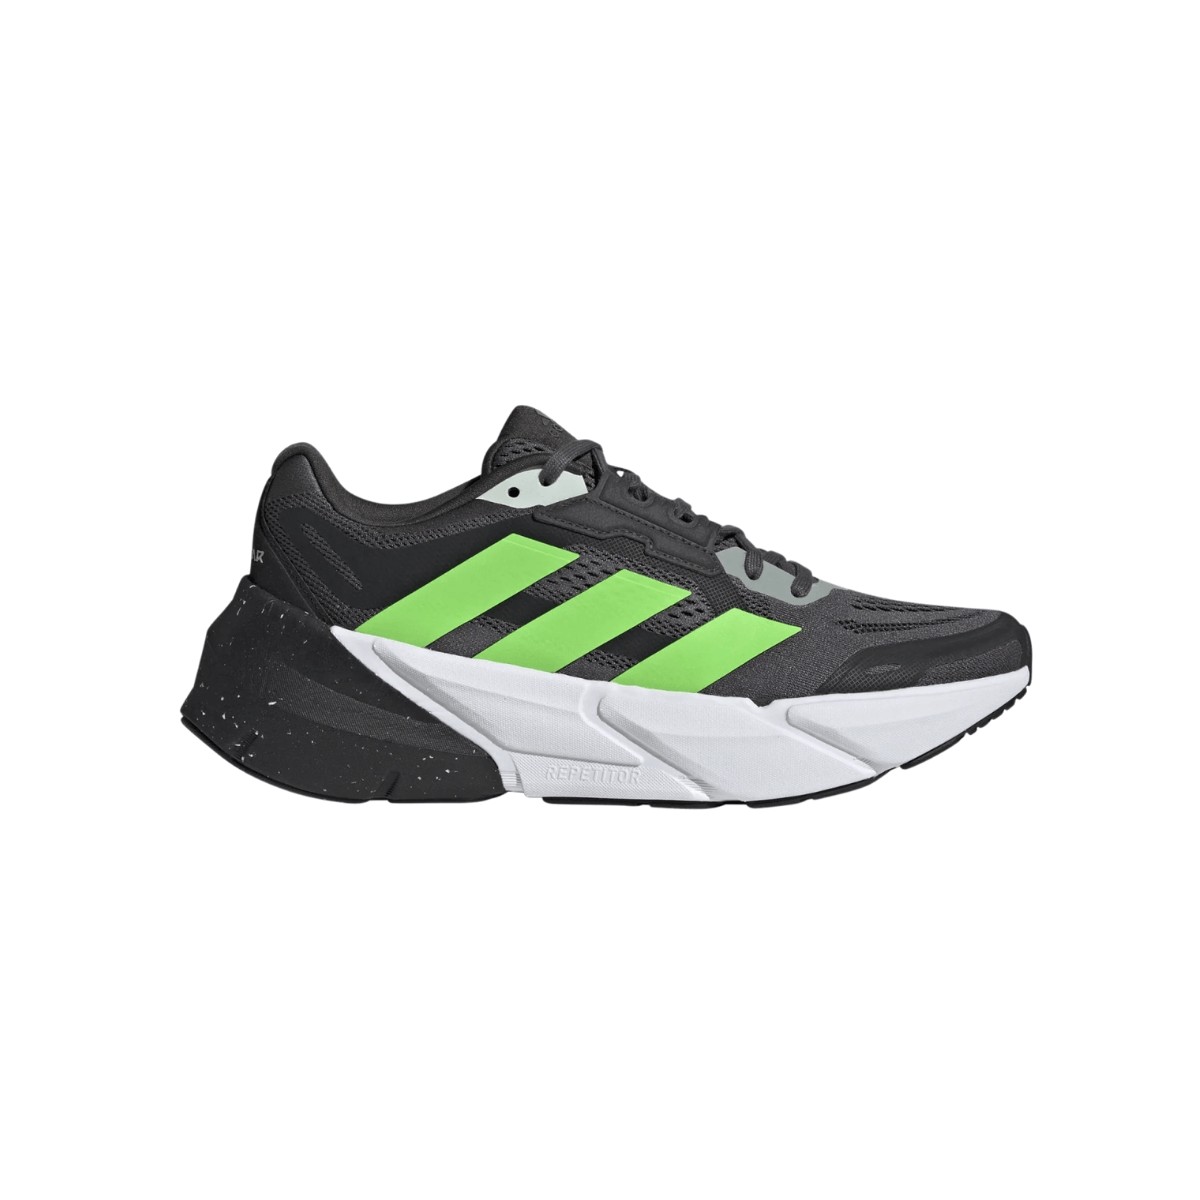 Adidas Adistar 1 Shoes Black Green AW22, Size UK 7.5